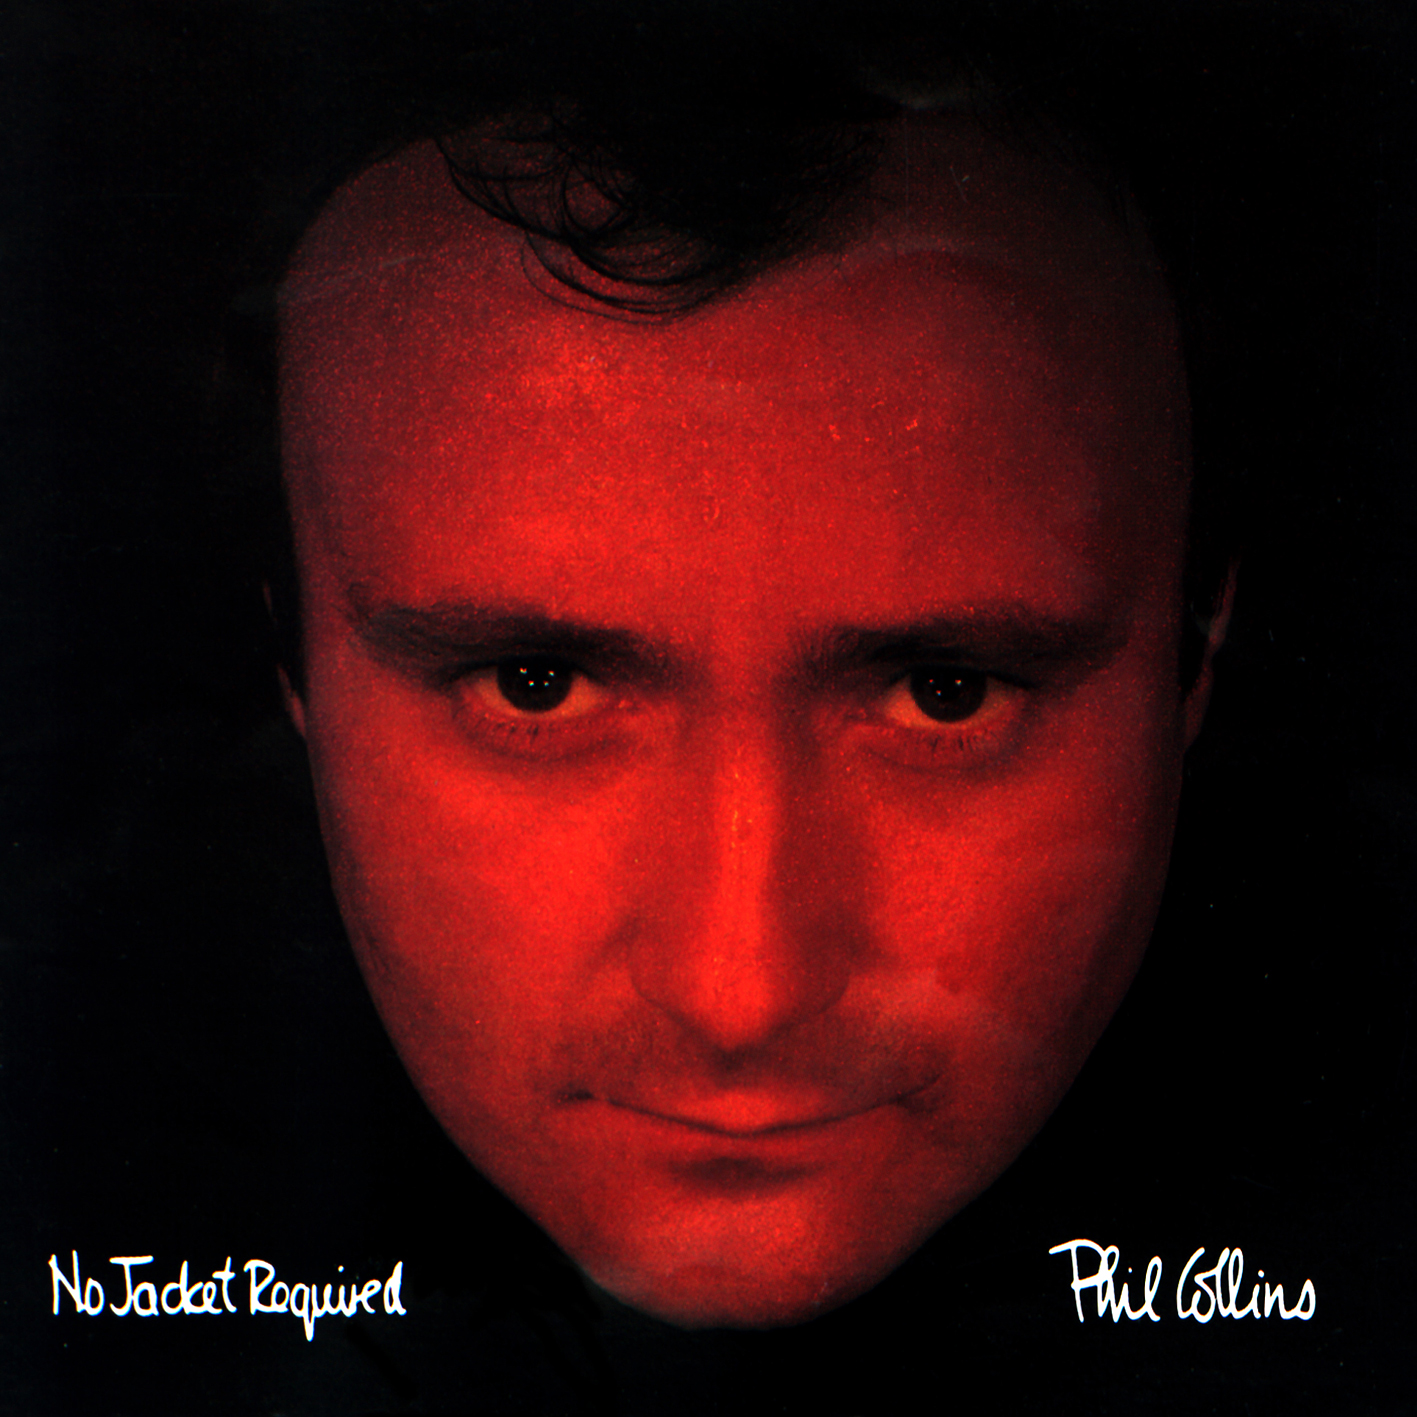 Phil Collins - No Jacket Required (1985/2013) [HDTracks 24bit/44.1kHz]